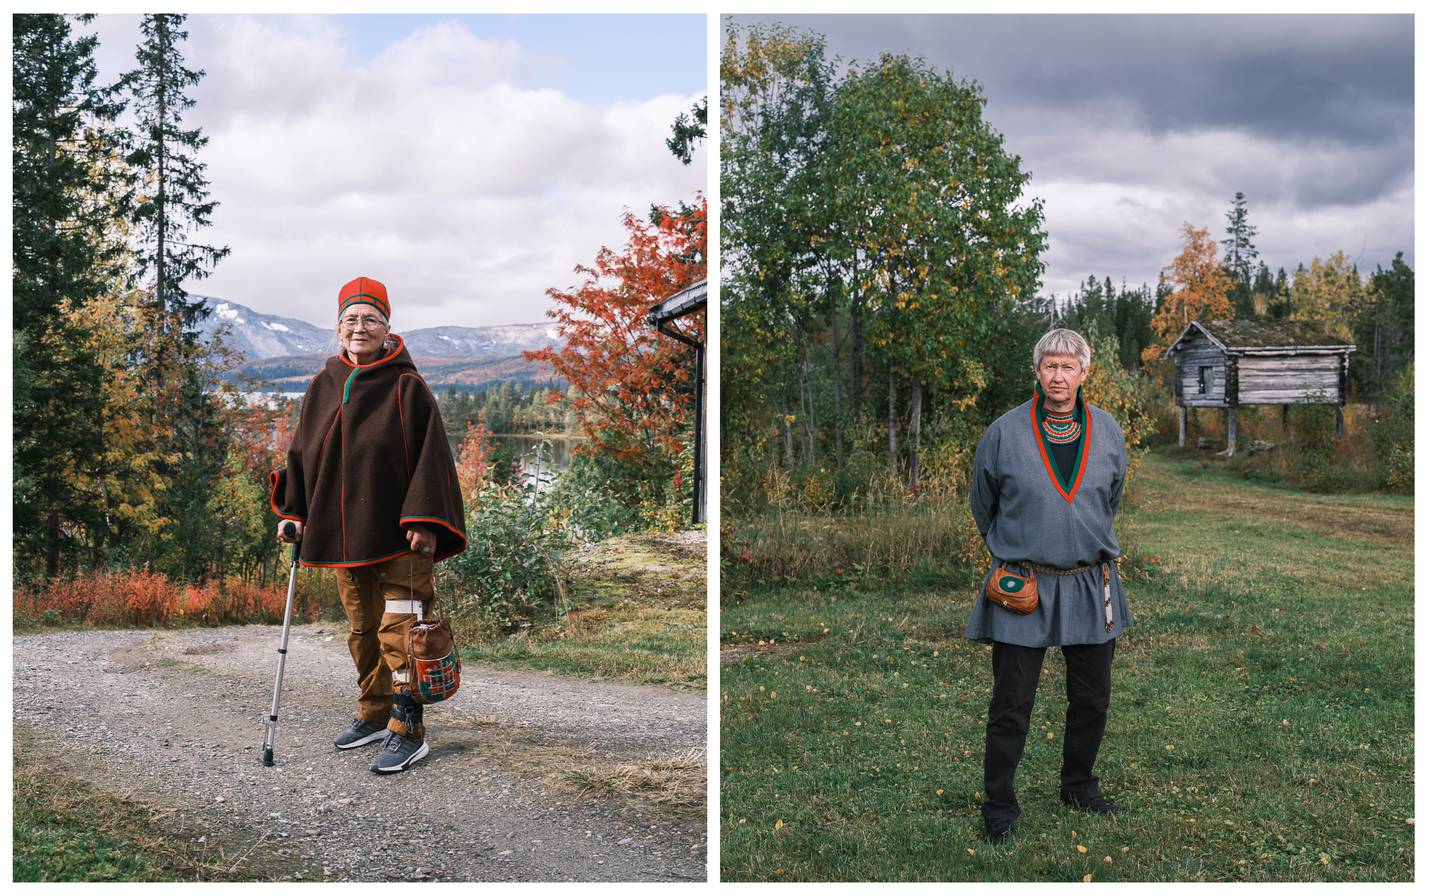 Hovedsak om samisk tro, forsoning og vindkraft. 

Maja Dunfjeld og Bertil Jönsson